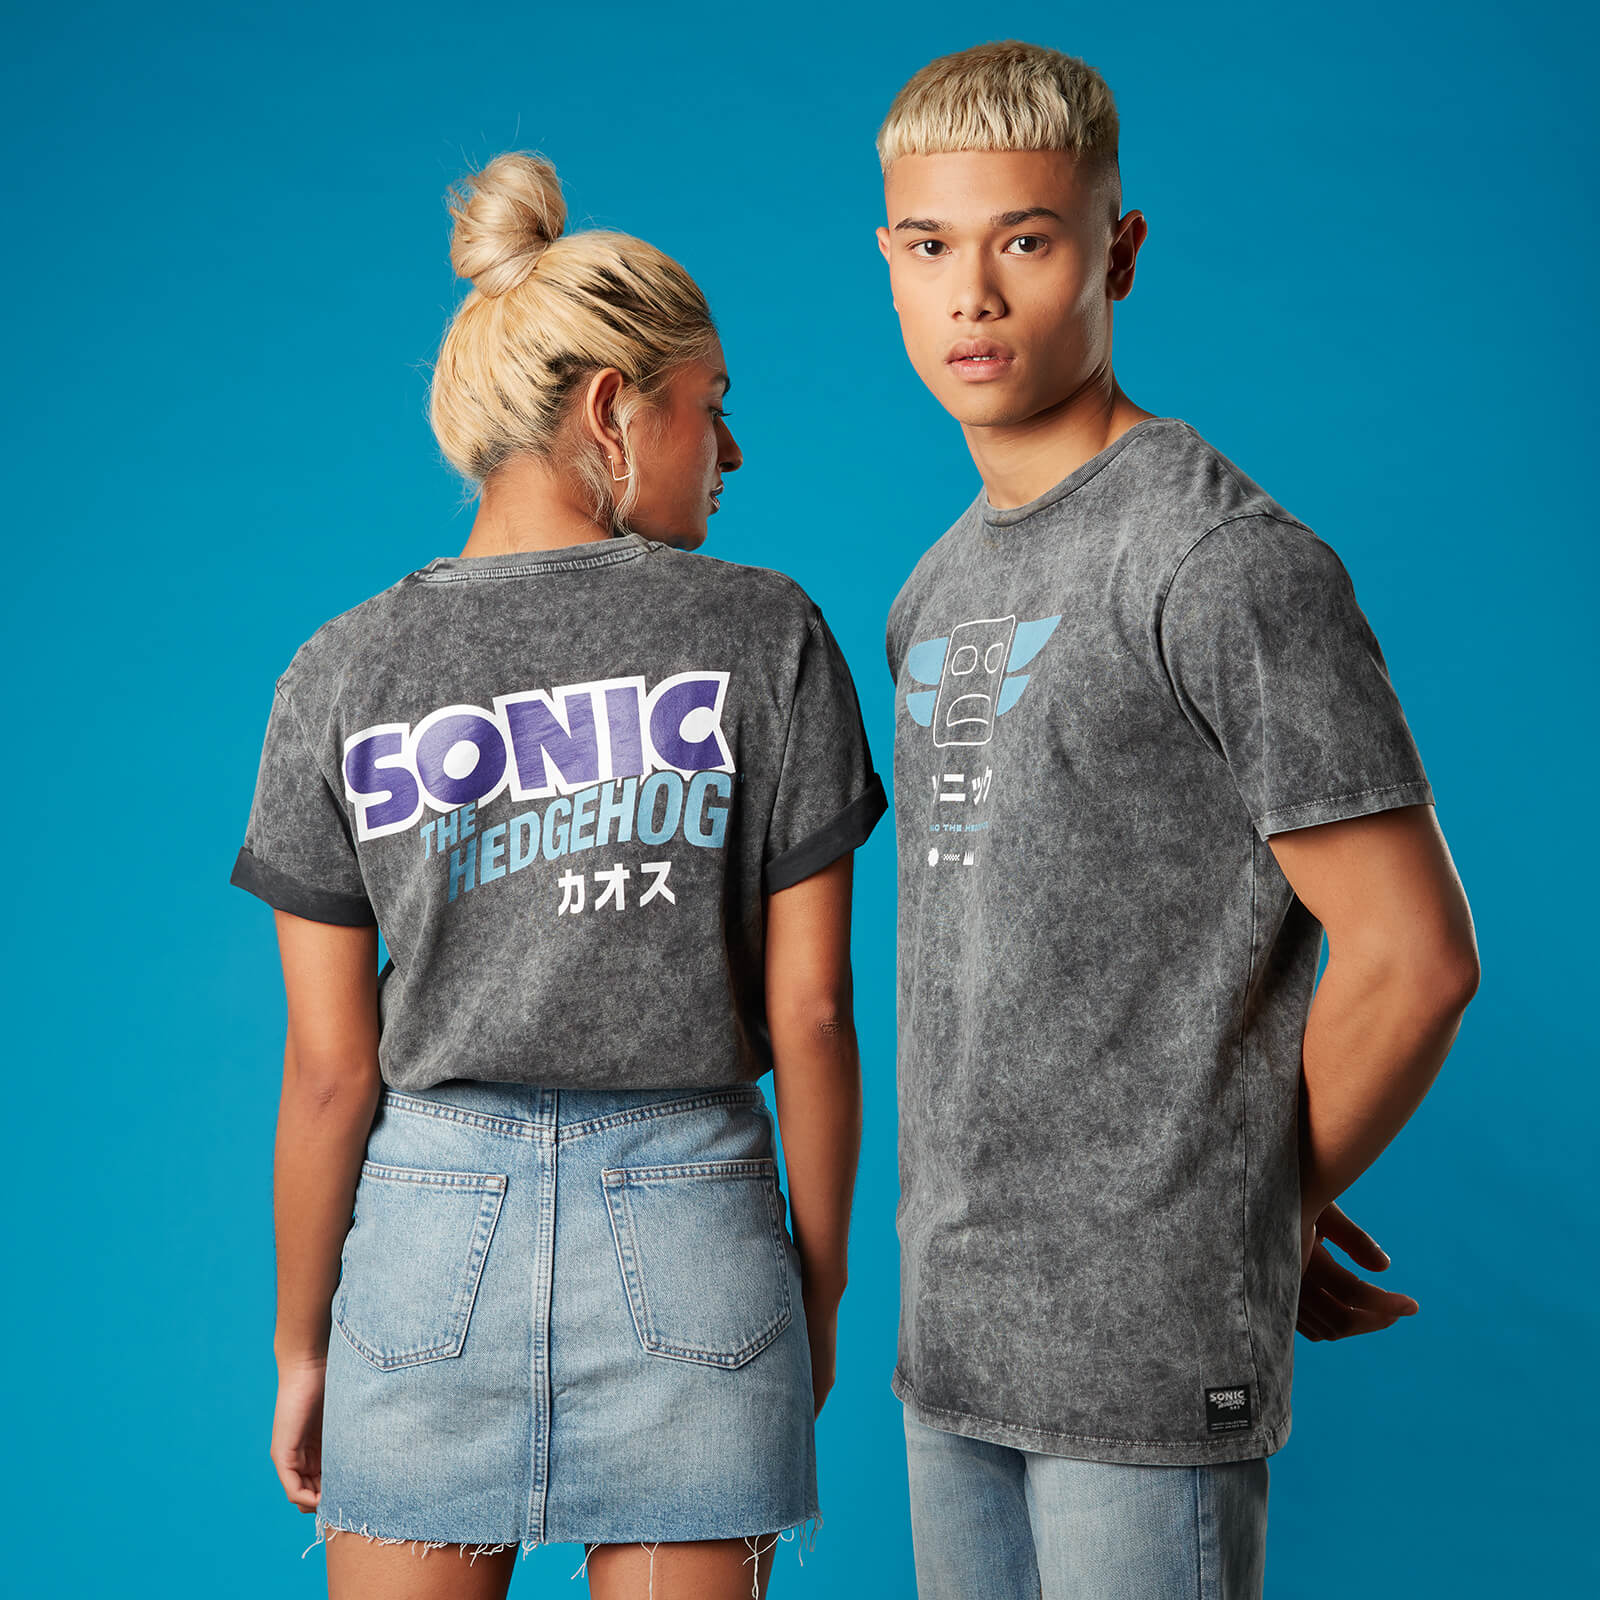 Totem Pole Sonic the Hedgehog Unisex T-Shirt - Black Acid Wash - XS